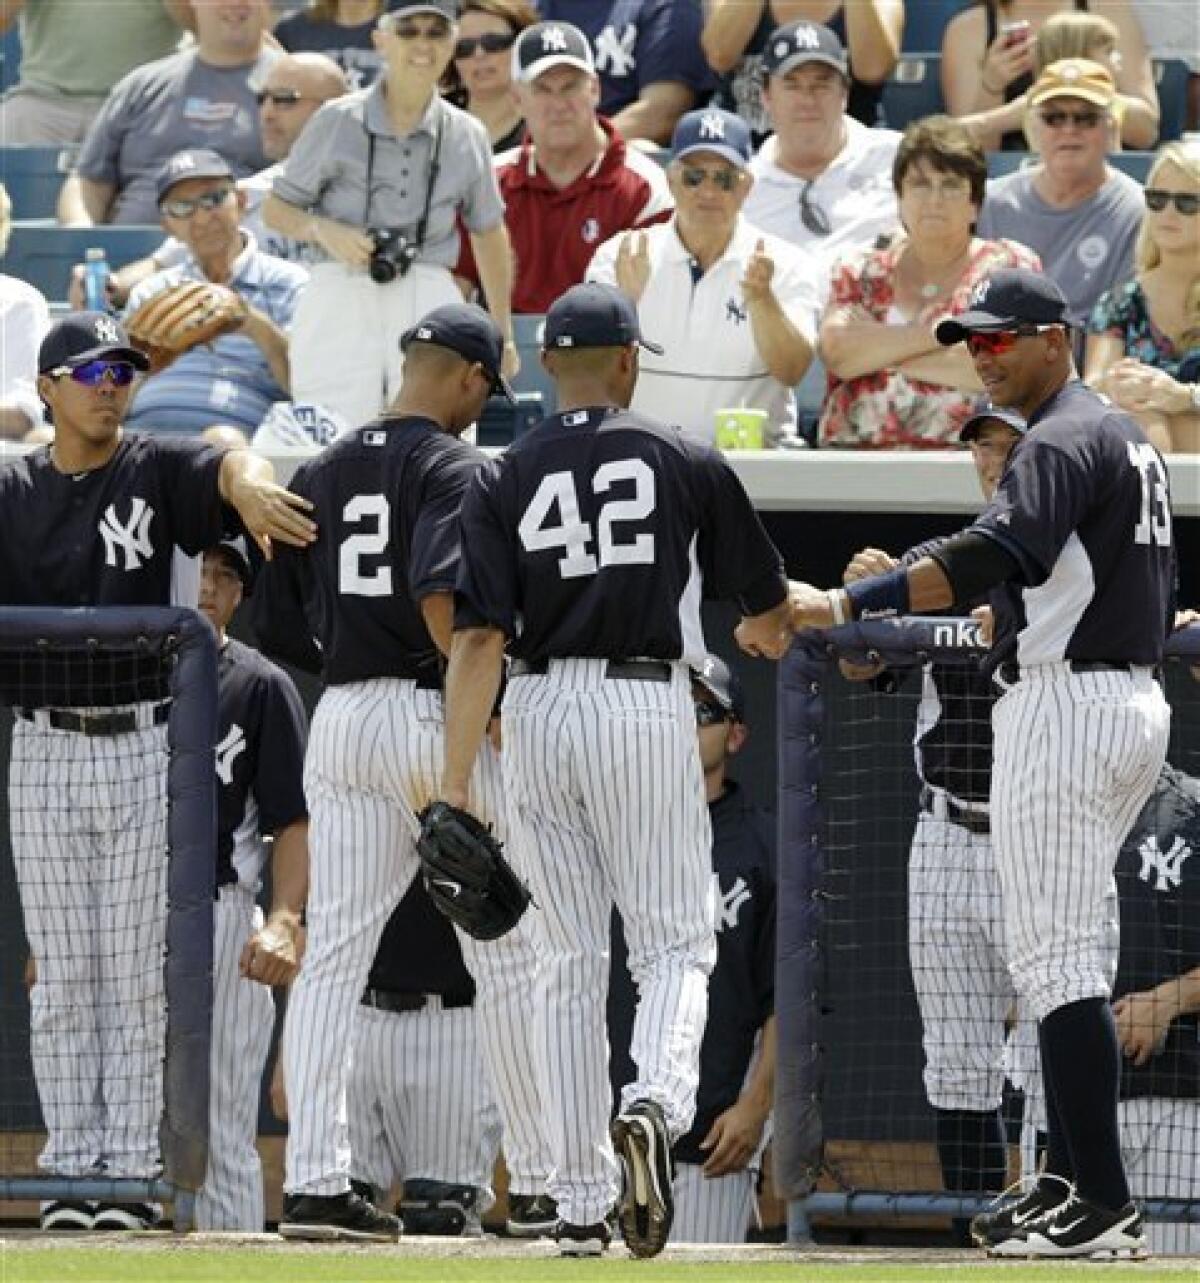 Mariano Rivera pitches his final innings at Yankee Stadium 